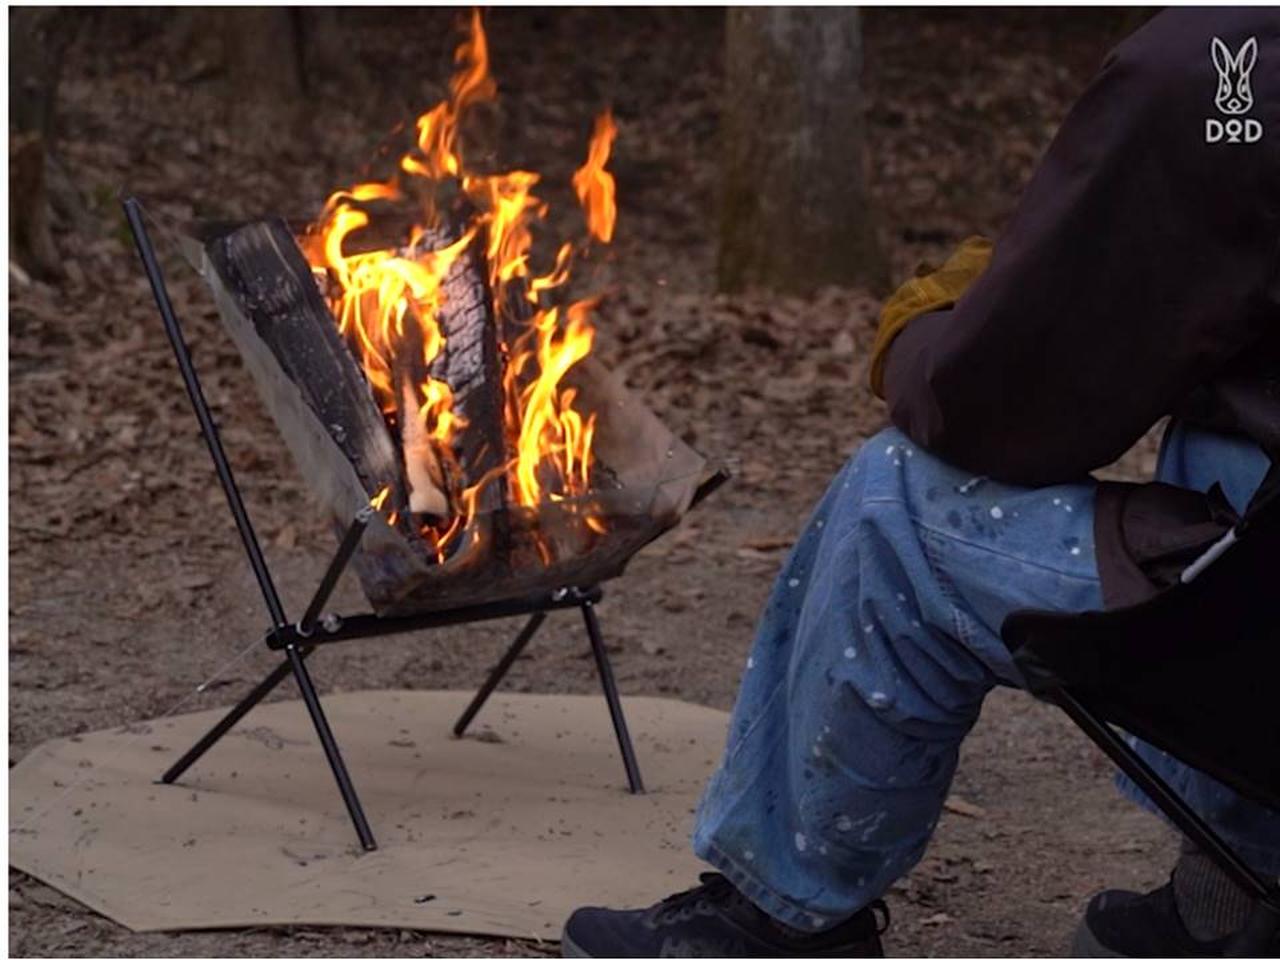 DOD新作「アツイッス」は椅子デザイン?! 焚き火と”会話”するための斬新